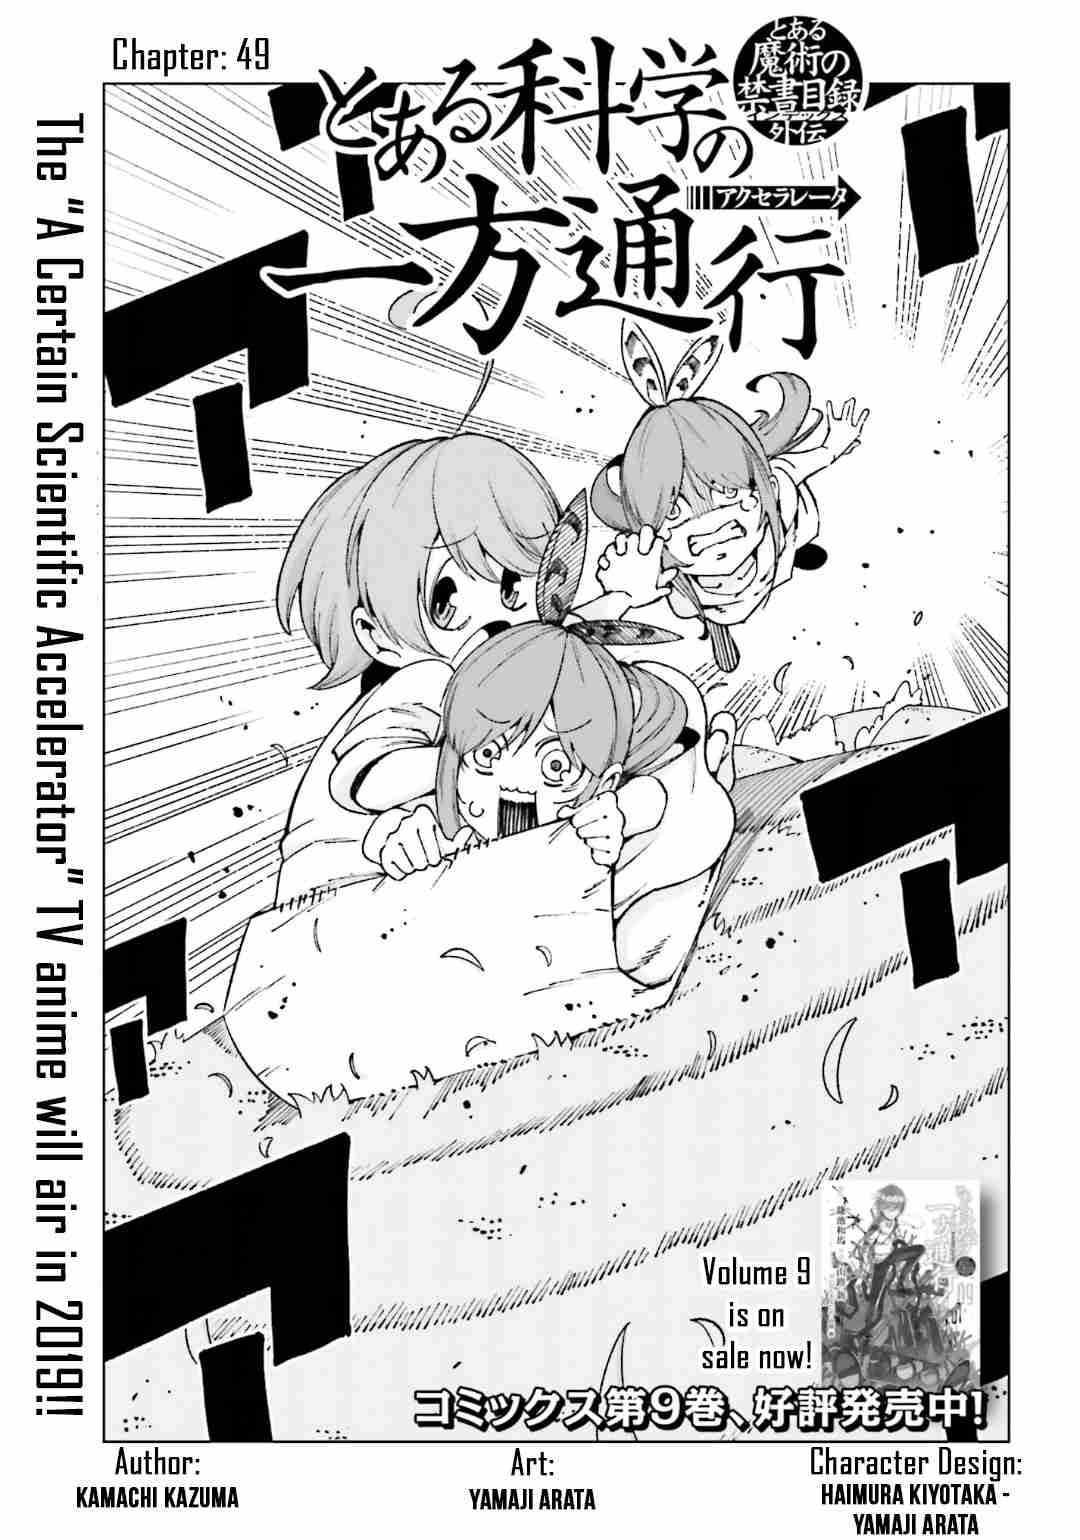 Toaru Kagaku no Accelerator Vol. 9 Ch. 49